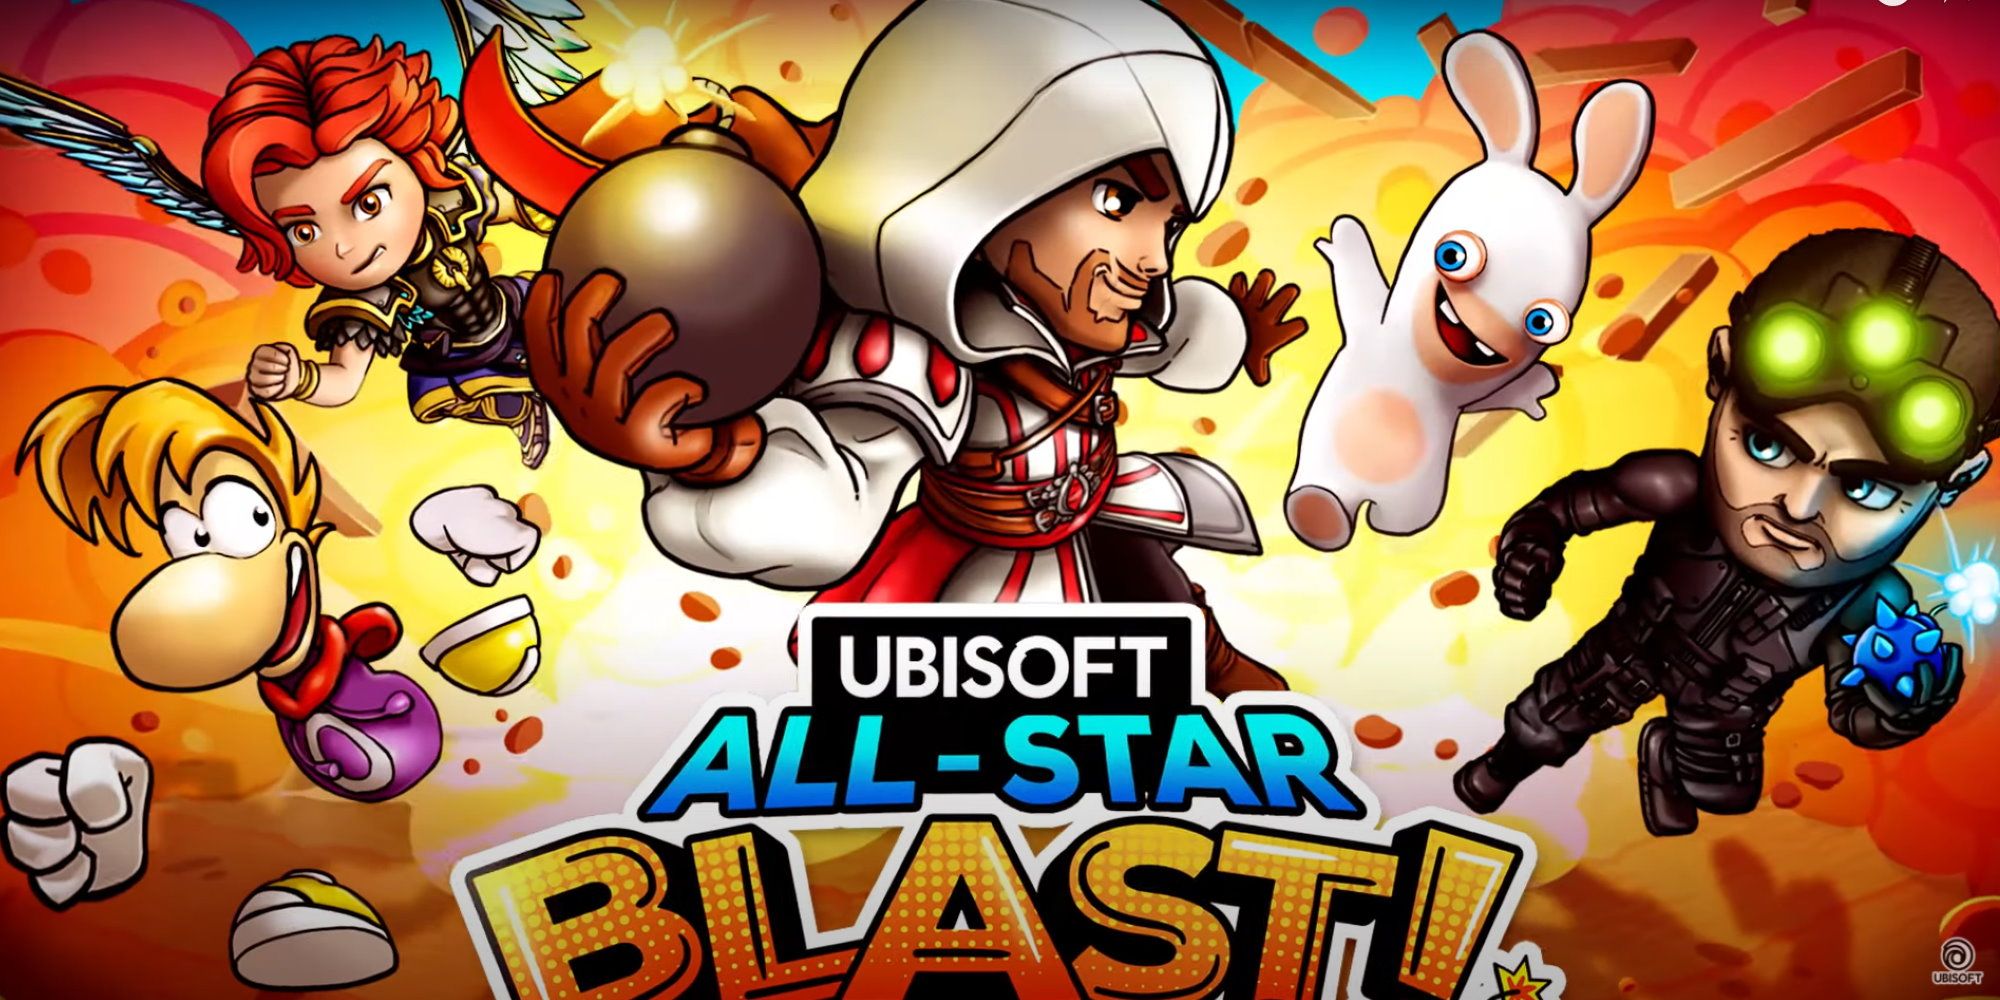 All-Star Blast - via Ubisoft